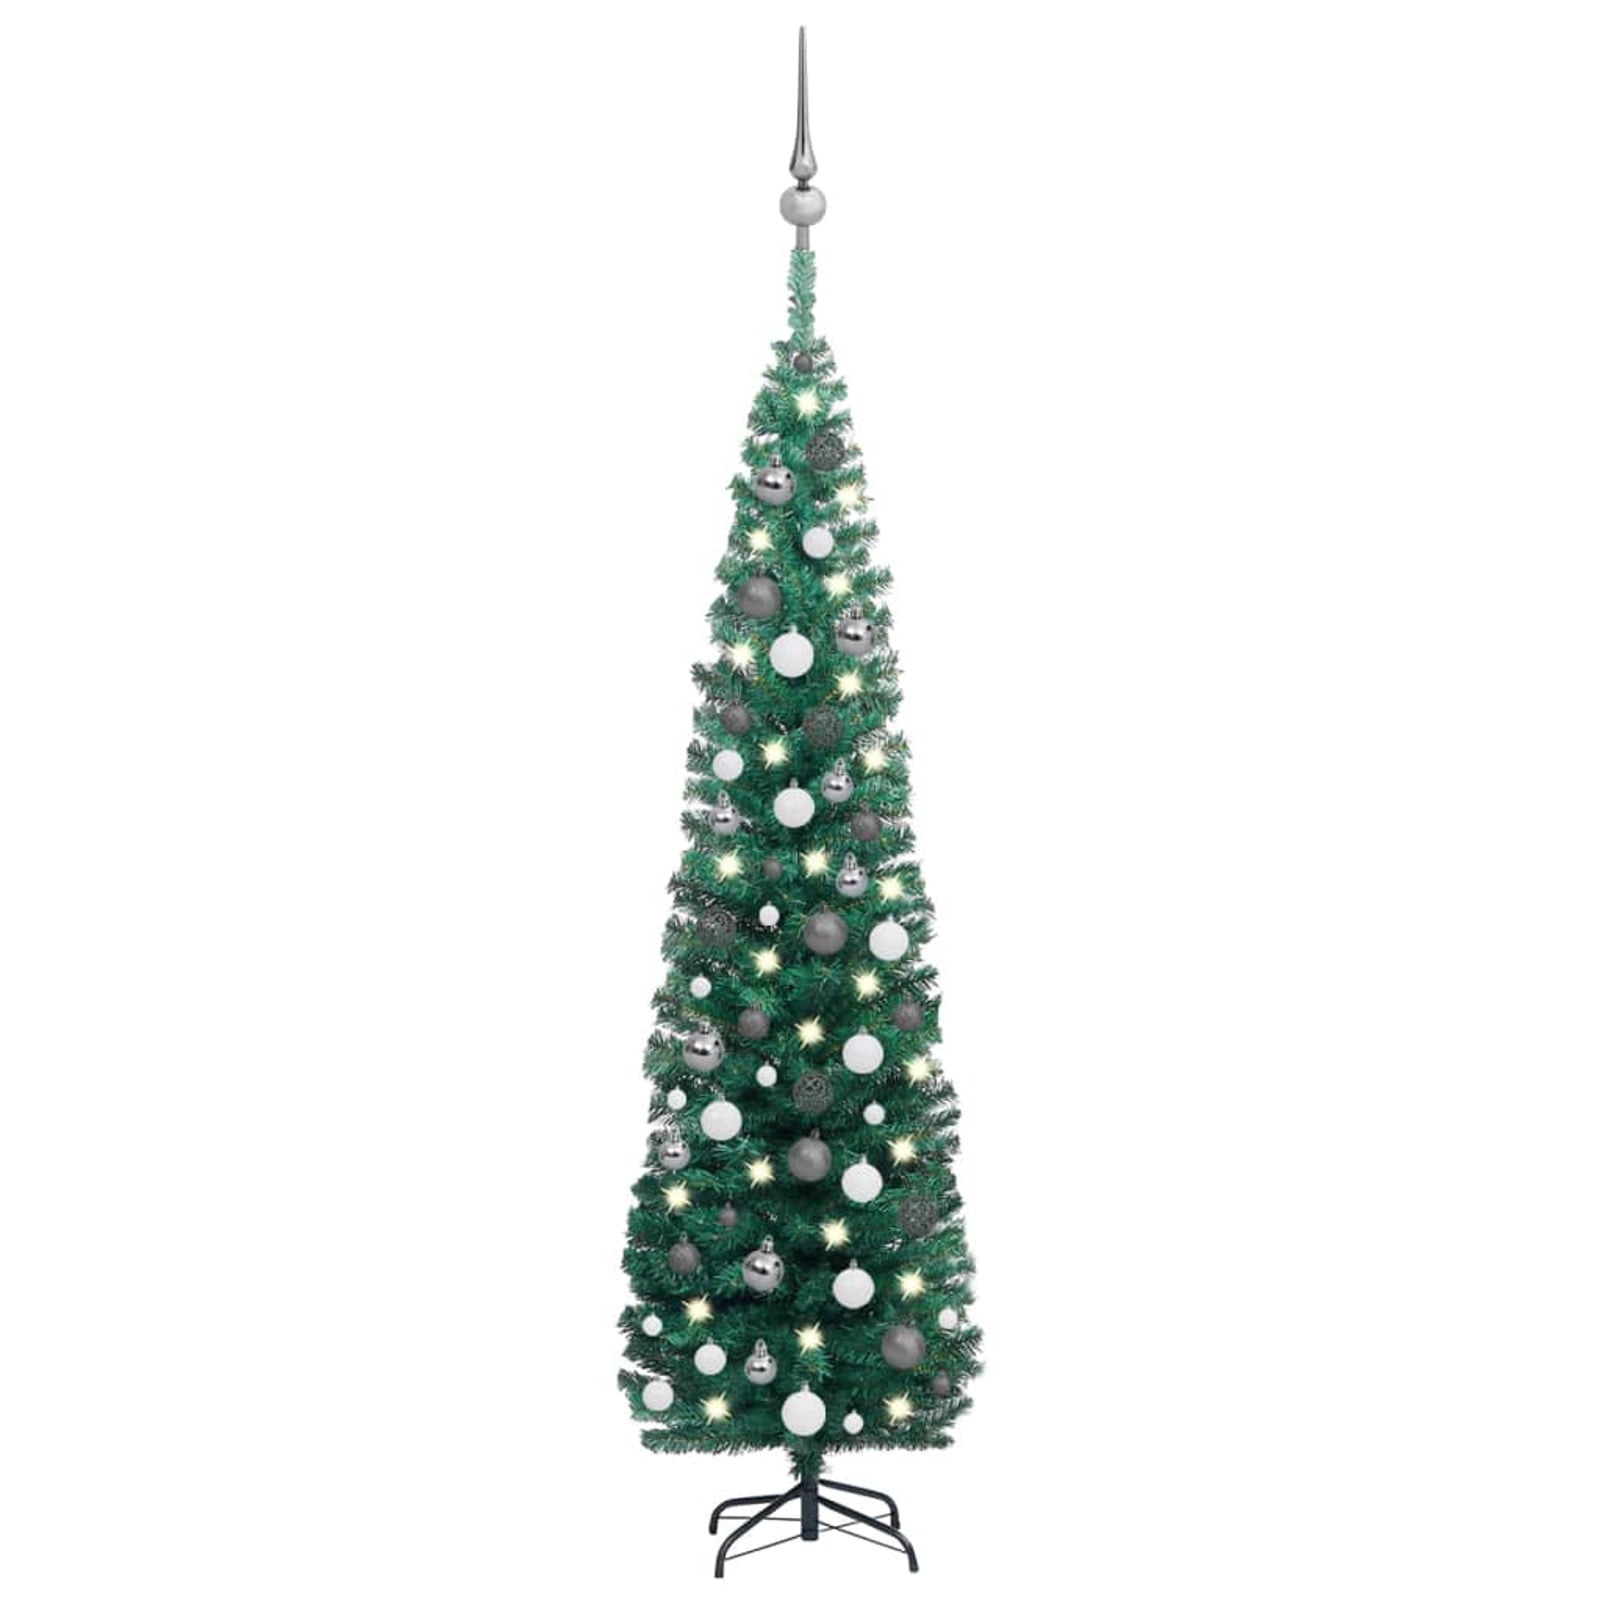 Details about   Christmas Tree Star Decor Gold Light Spots Waterproof Fabric Shower Curtain Set 